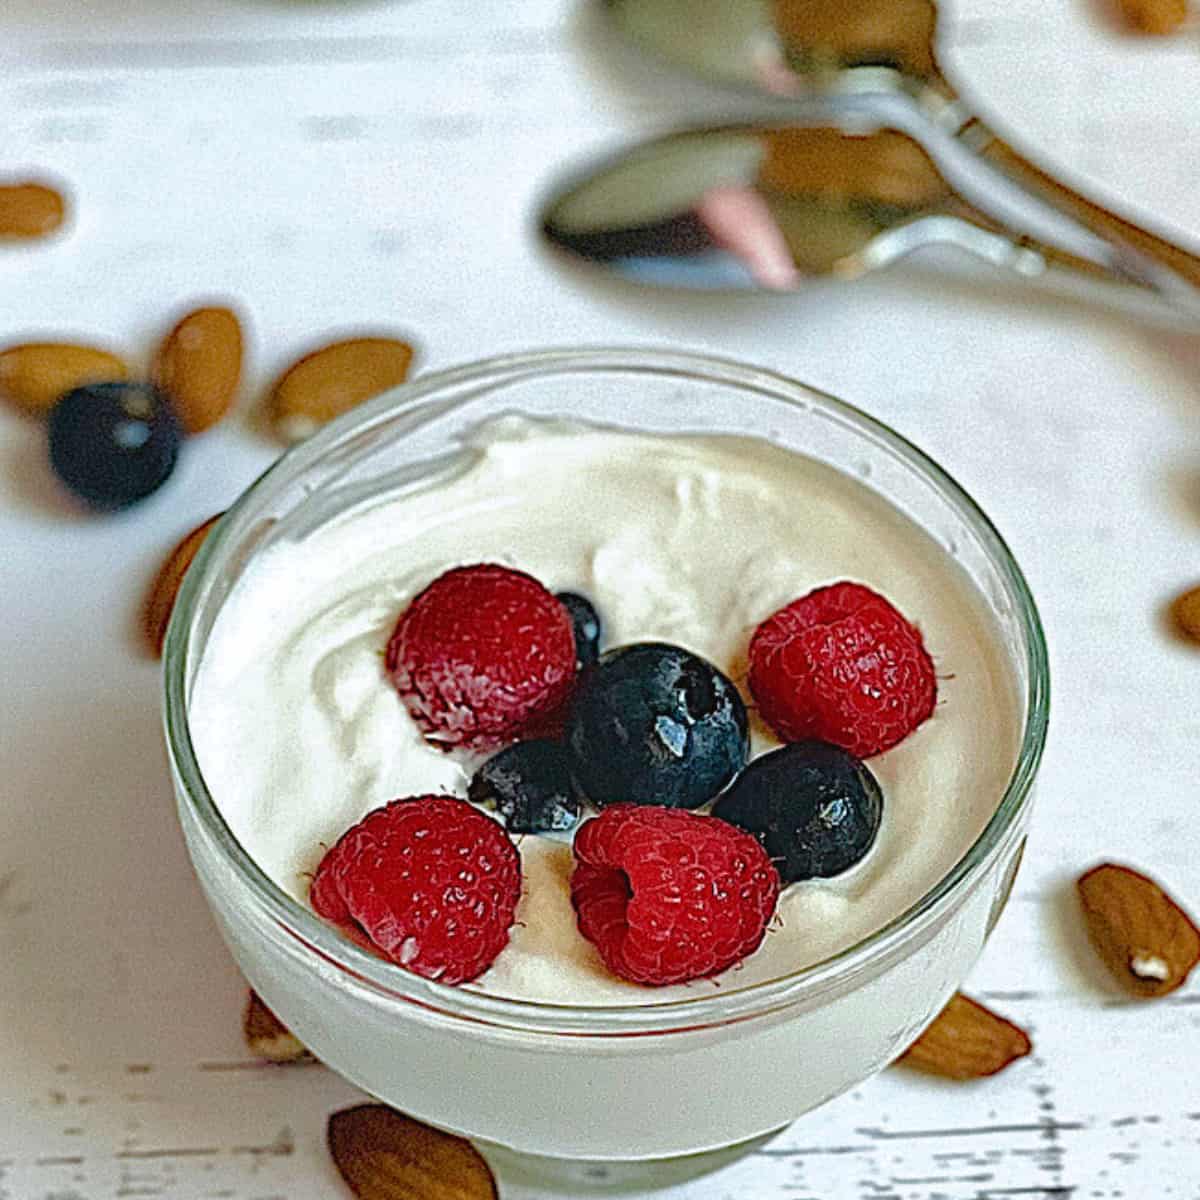 https://tastyoven.com/wp-content/uploads/2019/12/homemade-greek-yogurt-image.jpeg